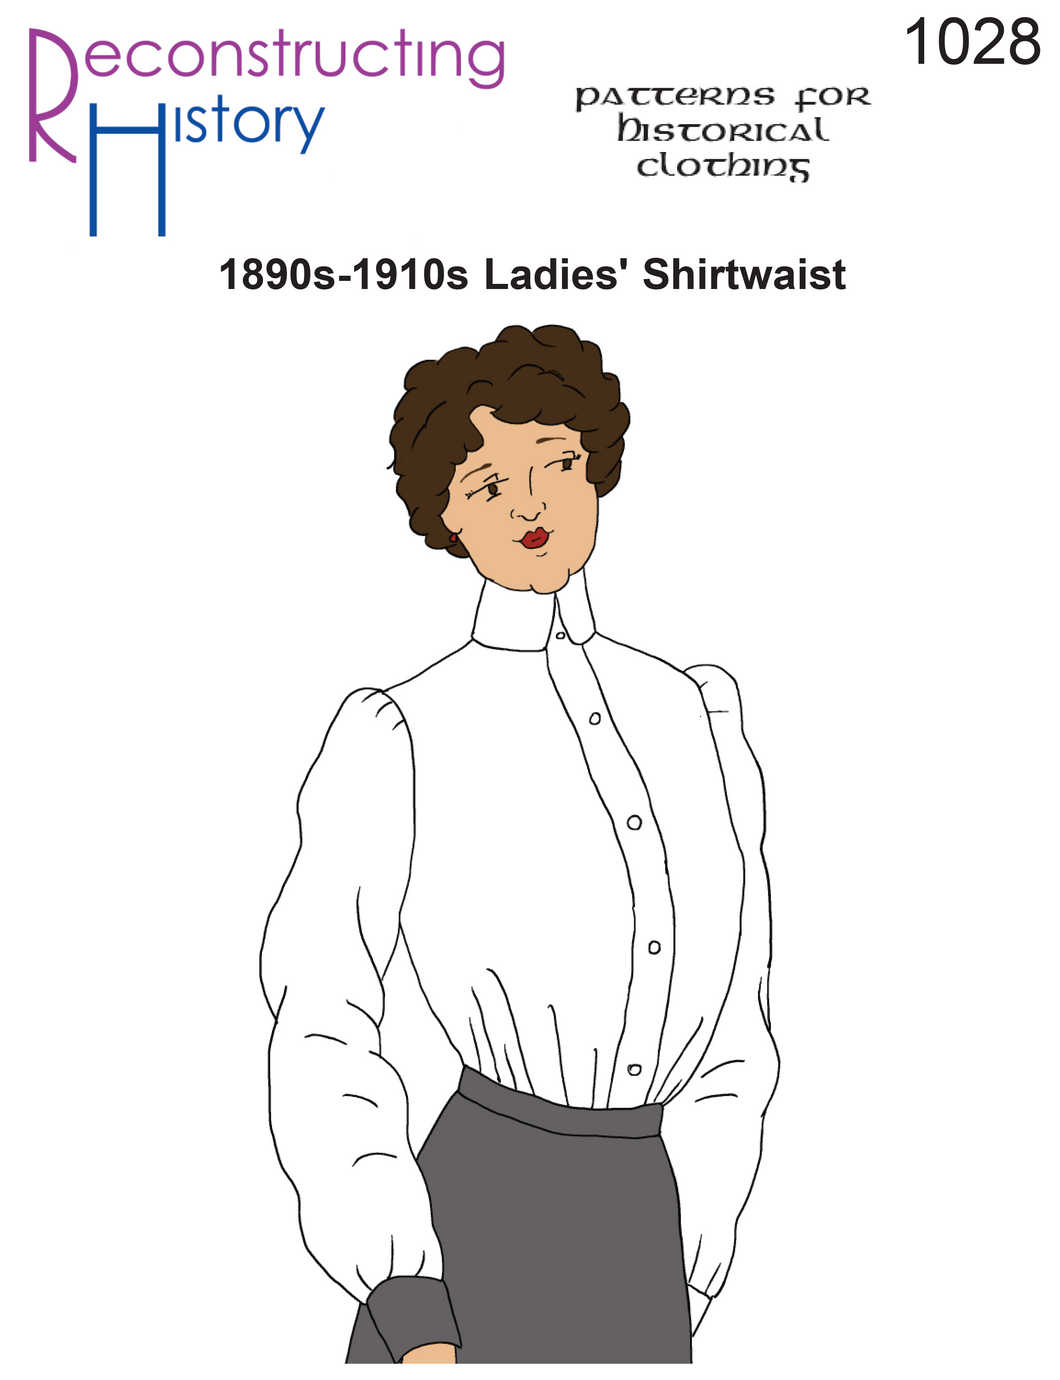 RH1028 — Ladies' 1910s Shirtwaist sewing pattern